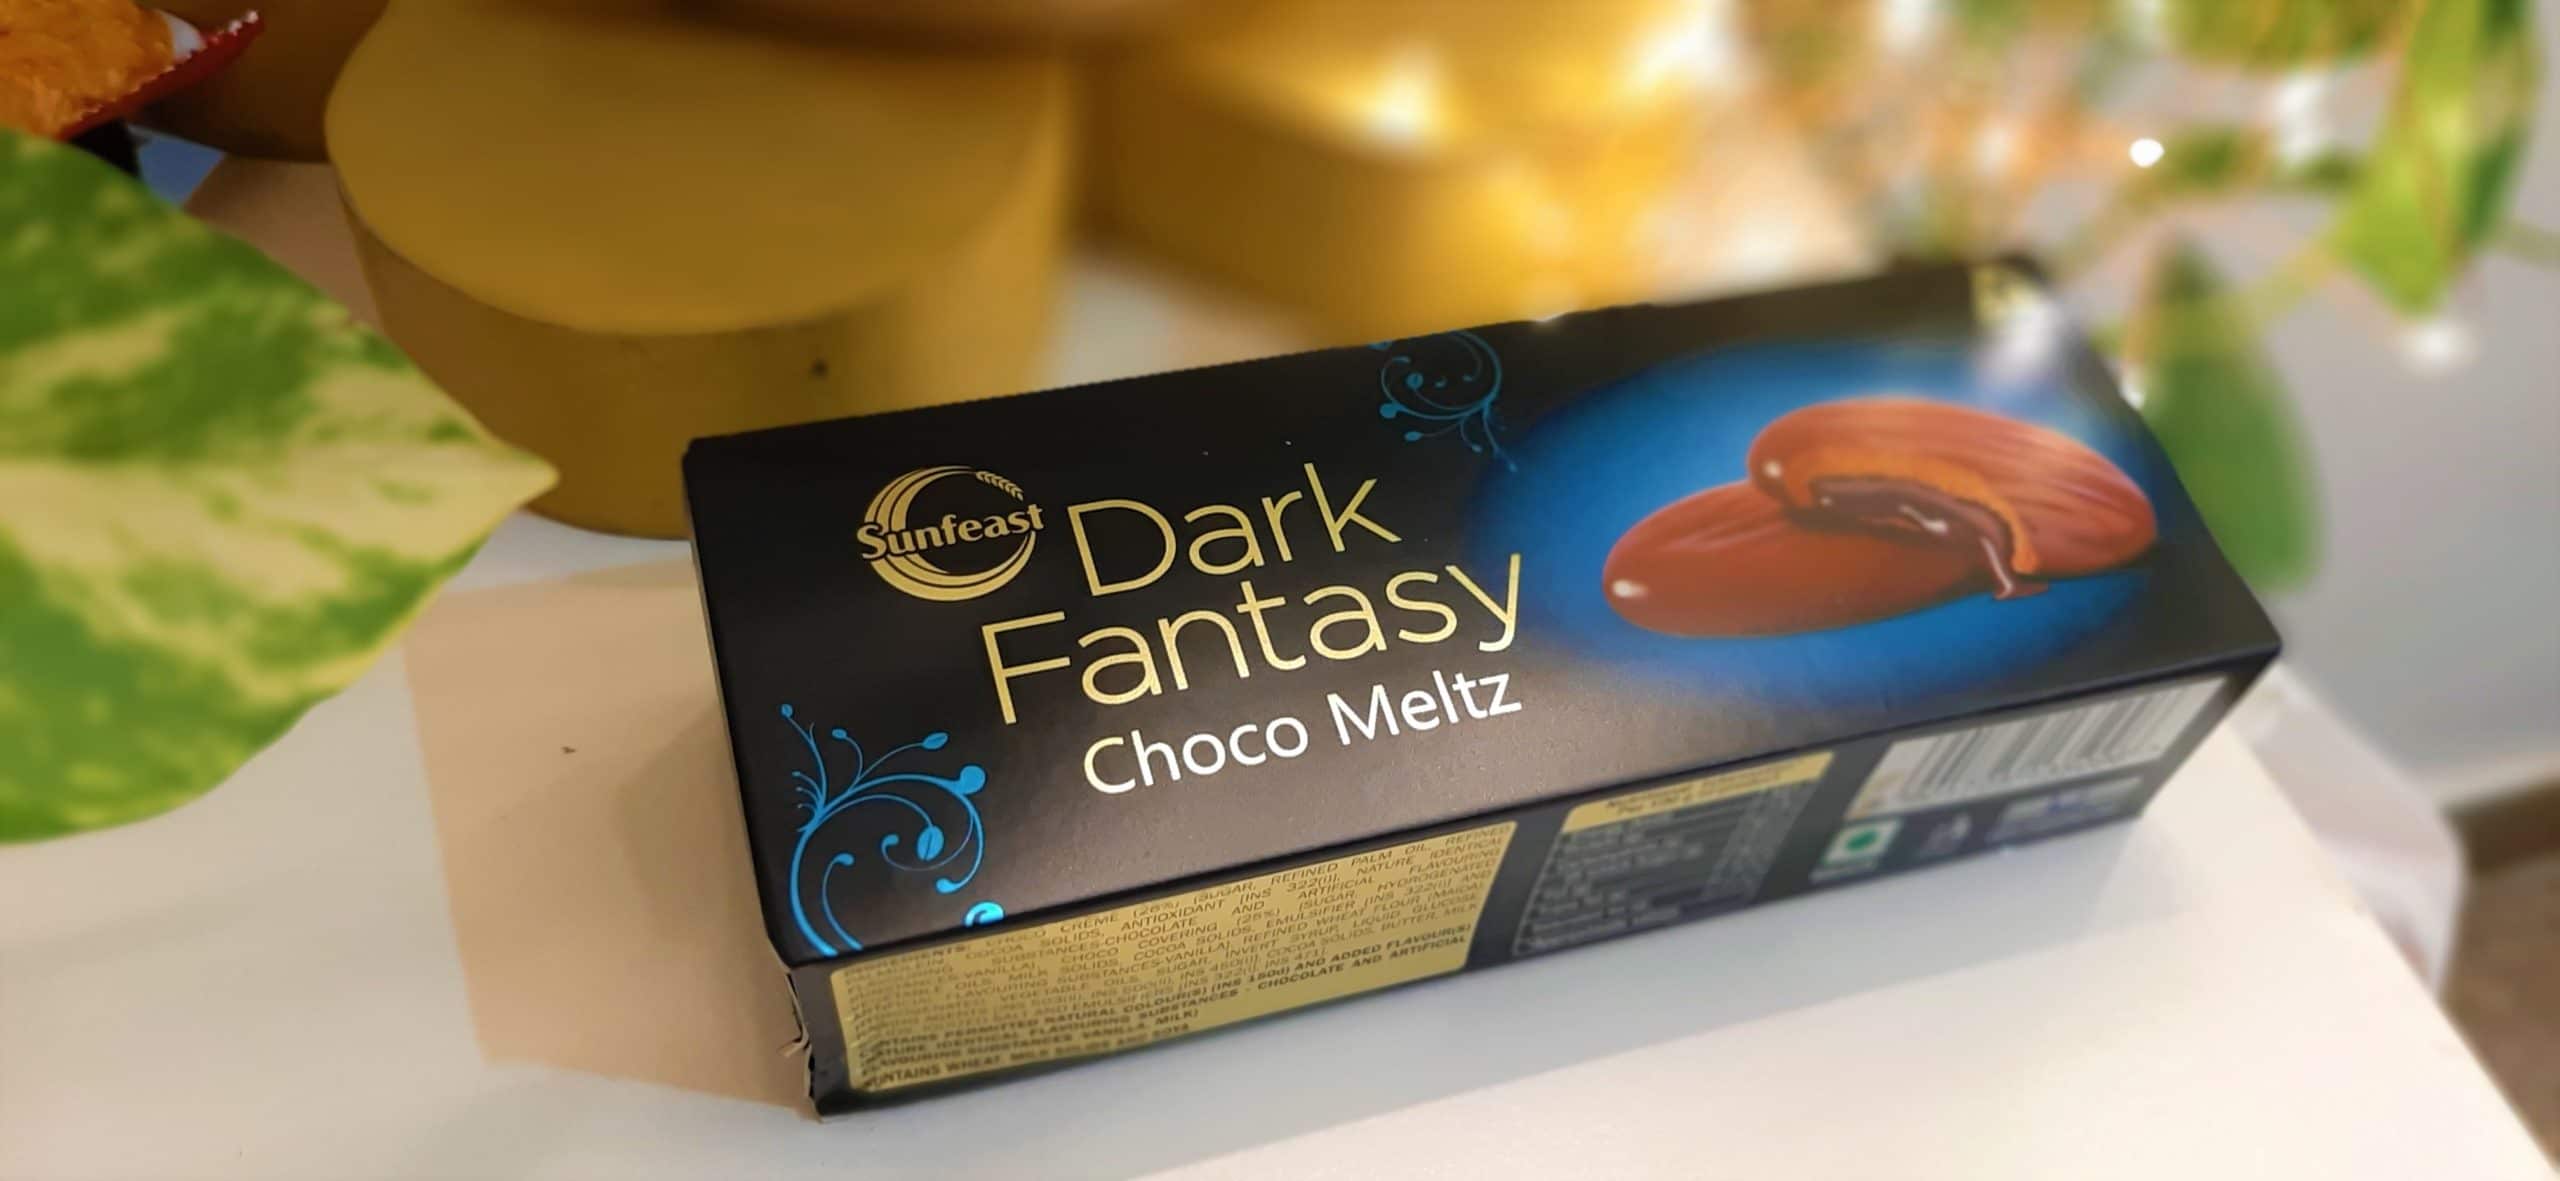 Sunfeast Dark Fantasy Choco Meltz: #FirstImpressions